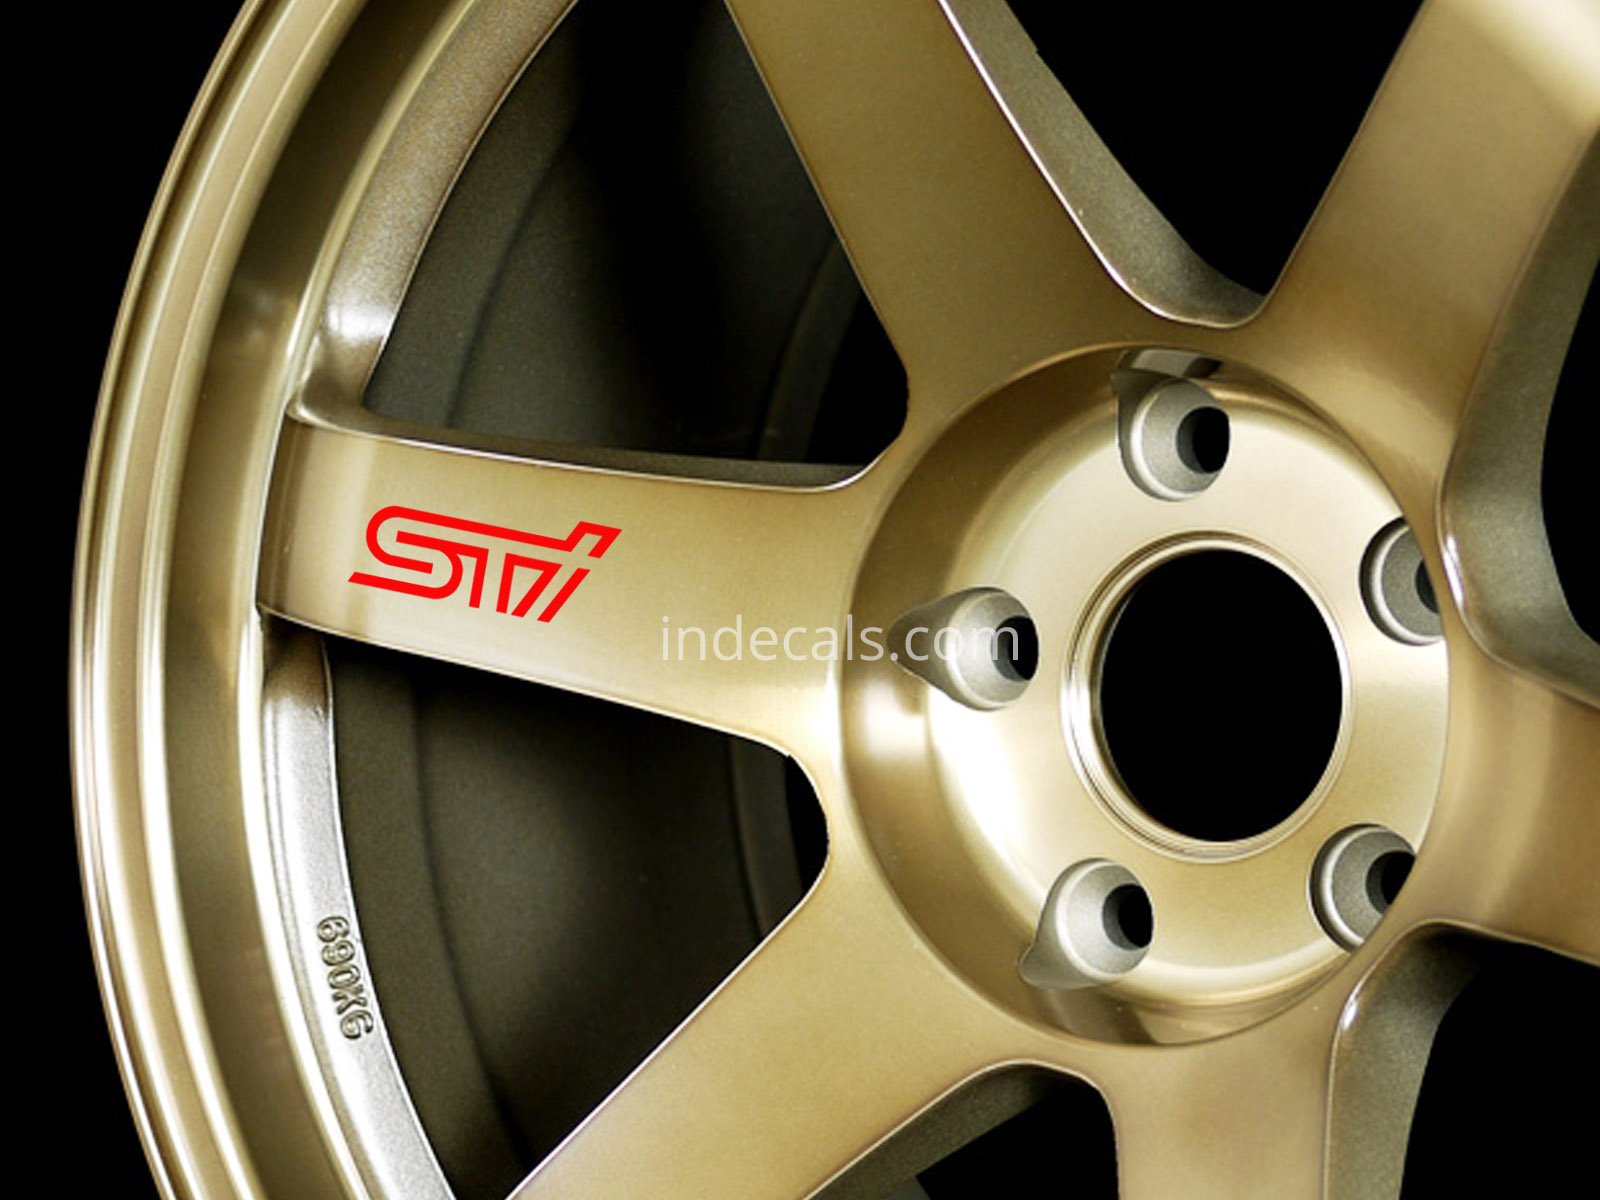 5 x Subaru STI stickers for Wheels - Red